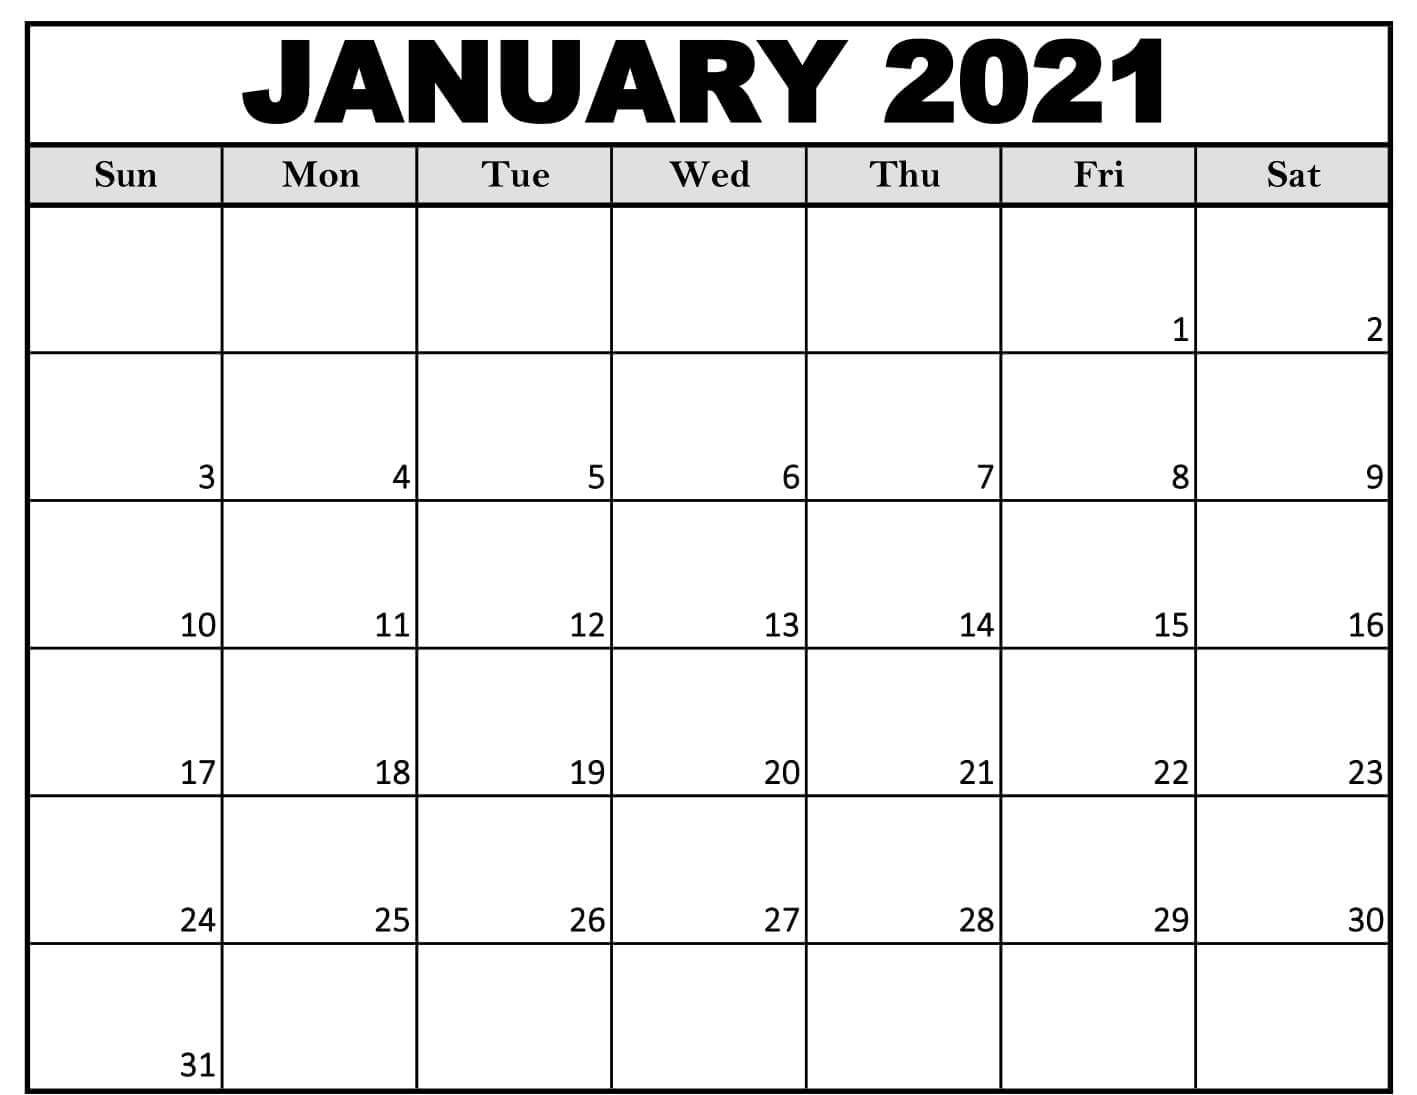 Blank Calendar For January 2021 - Free Printable 2021 Calendar Templates With Holidays January - June 2021 Calendar